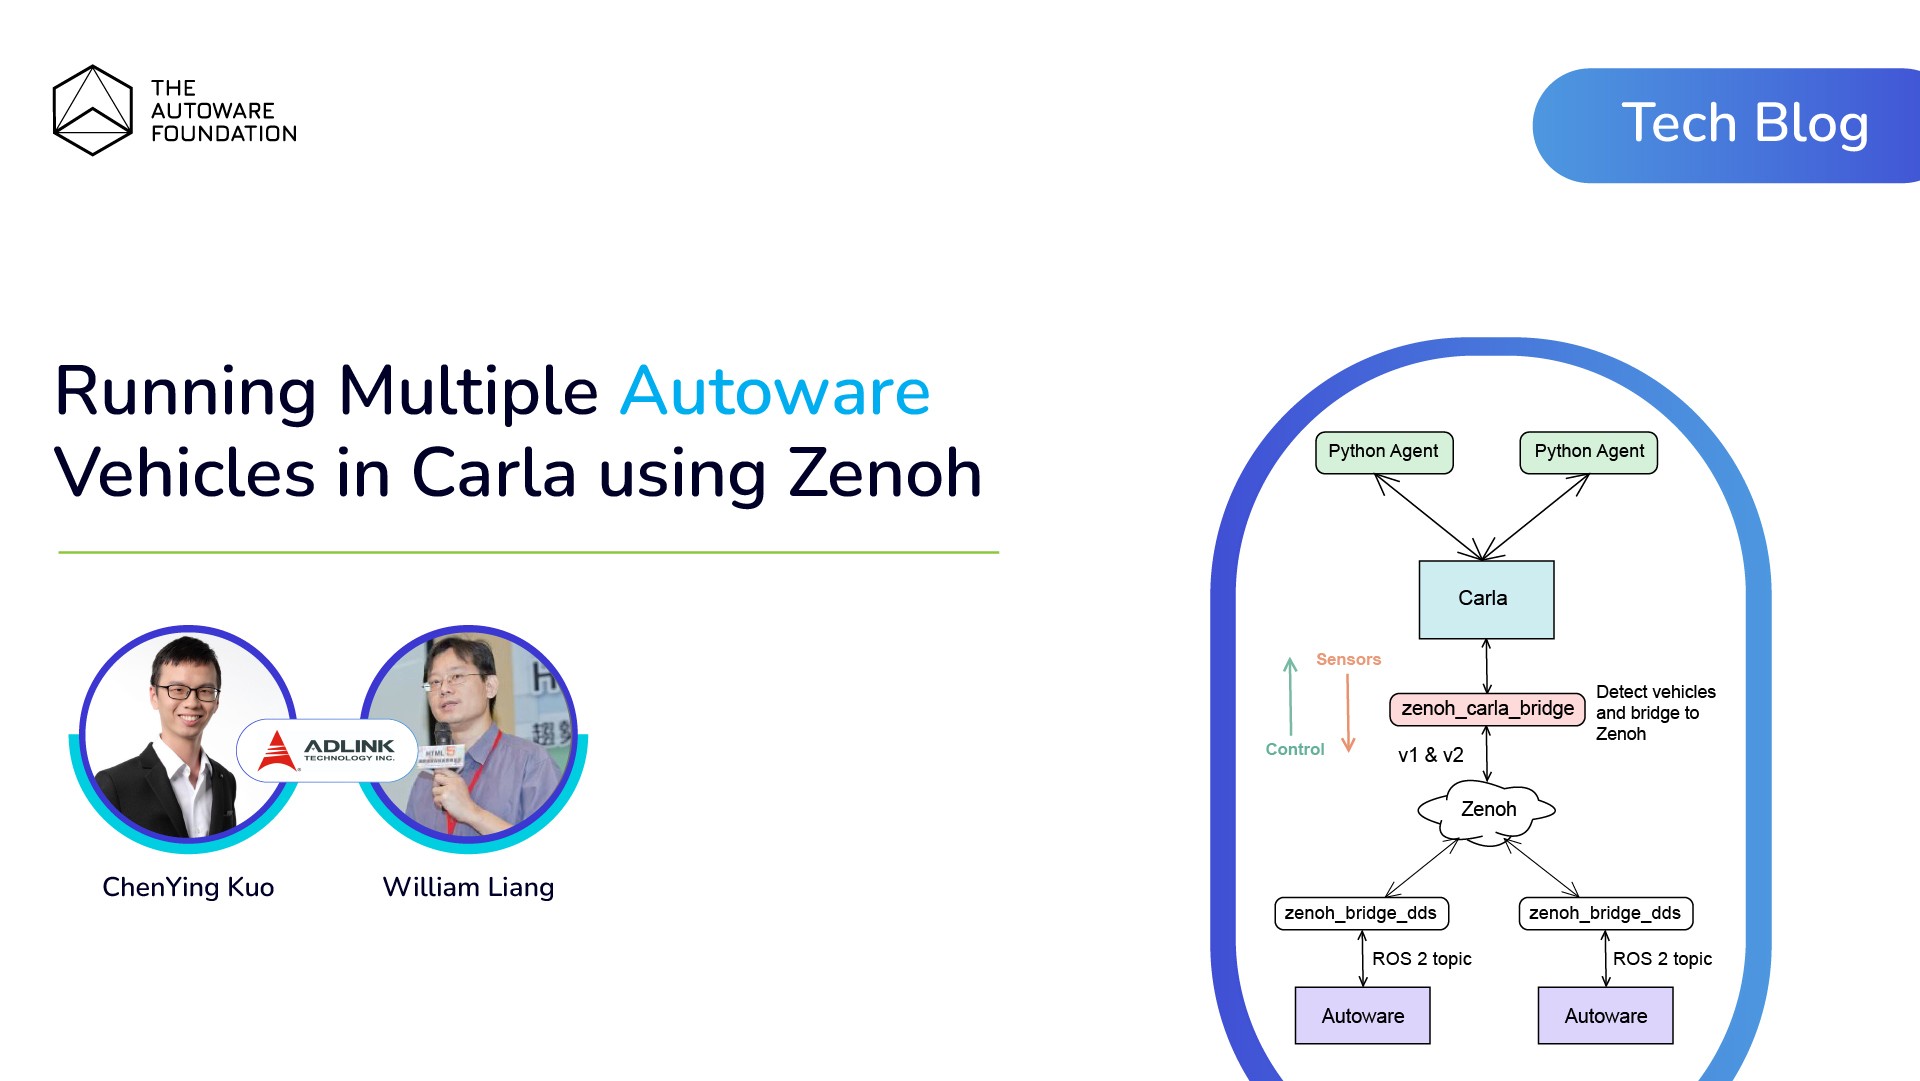 Running Multiple Autoware-Powered Vehicles in Carla using Zenoh